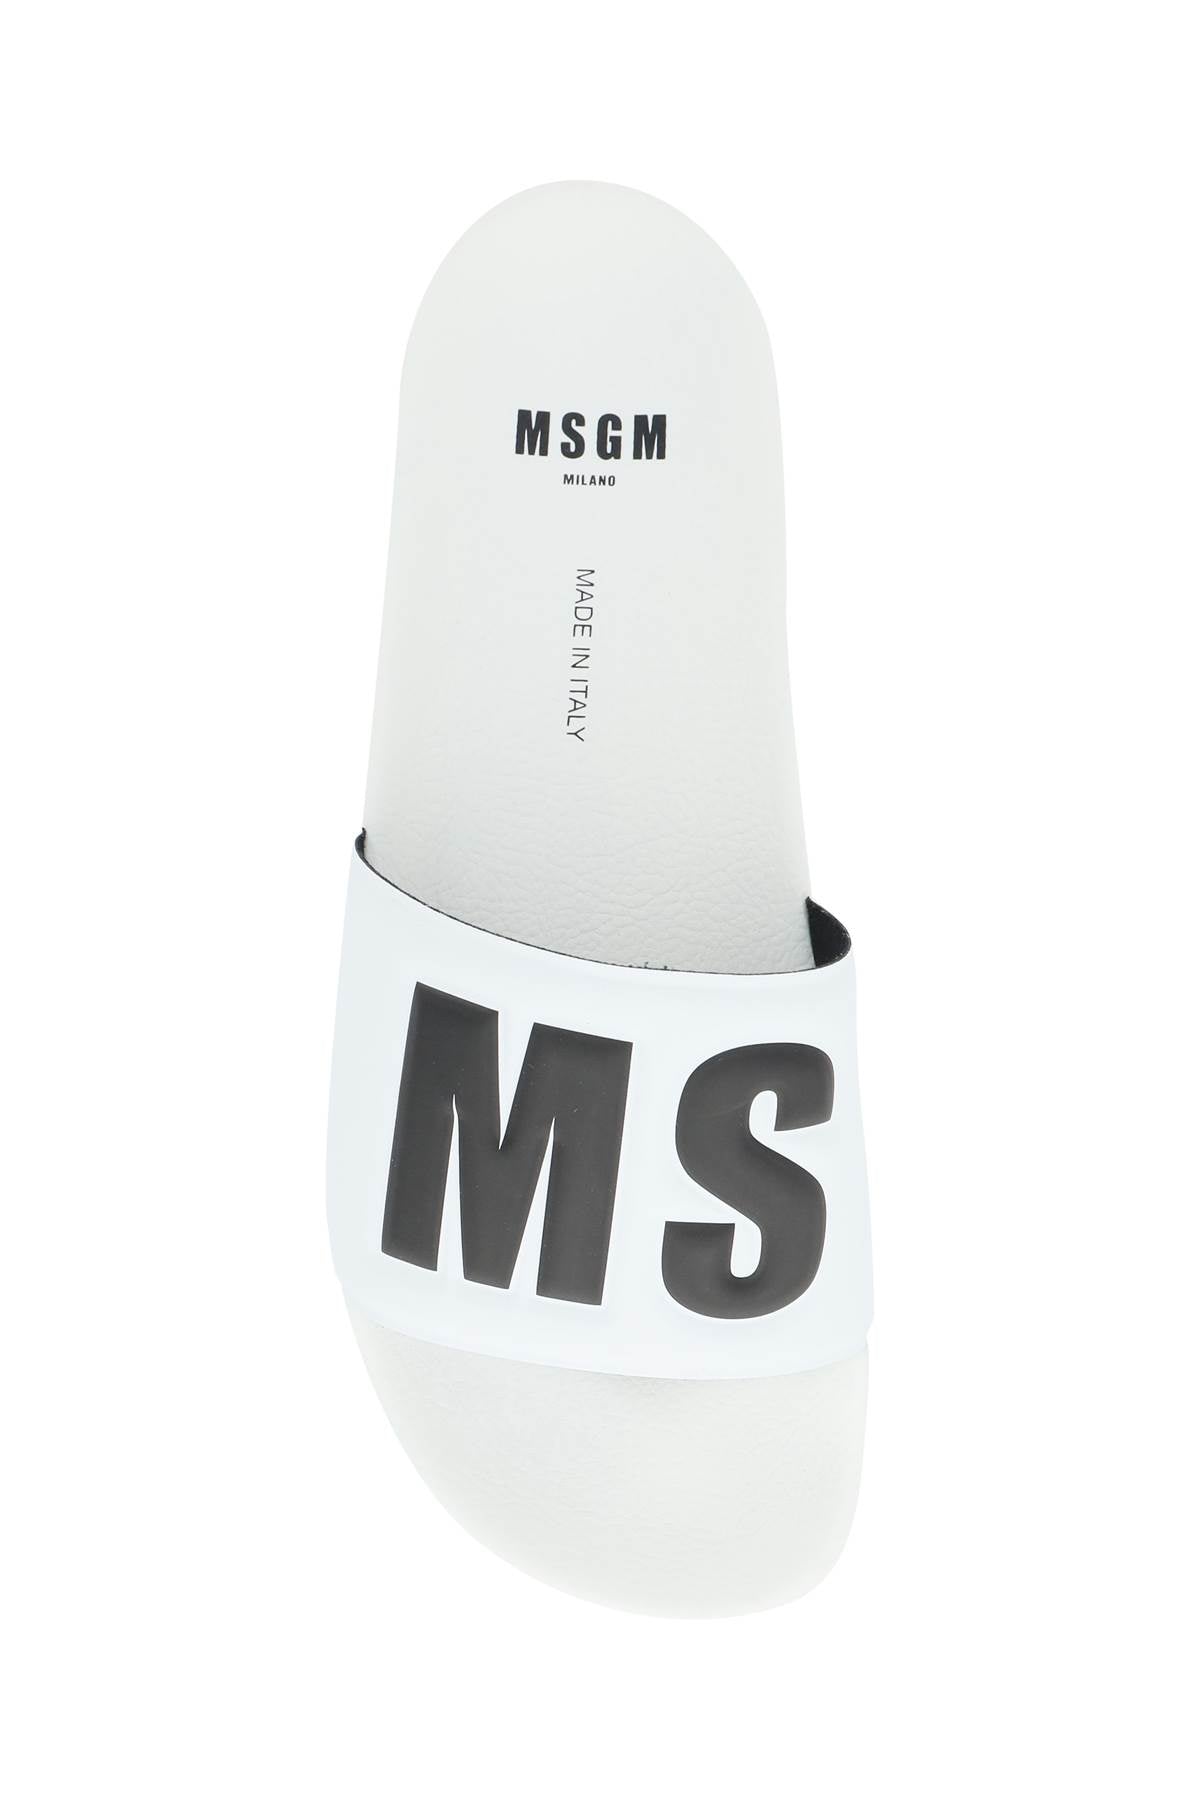 Msgm logo slides-1